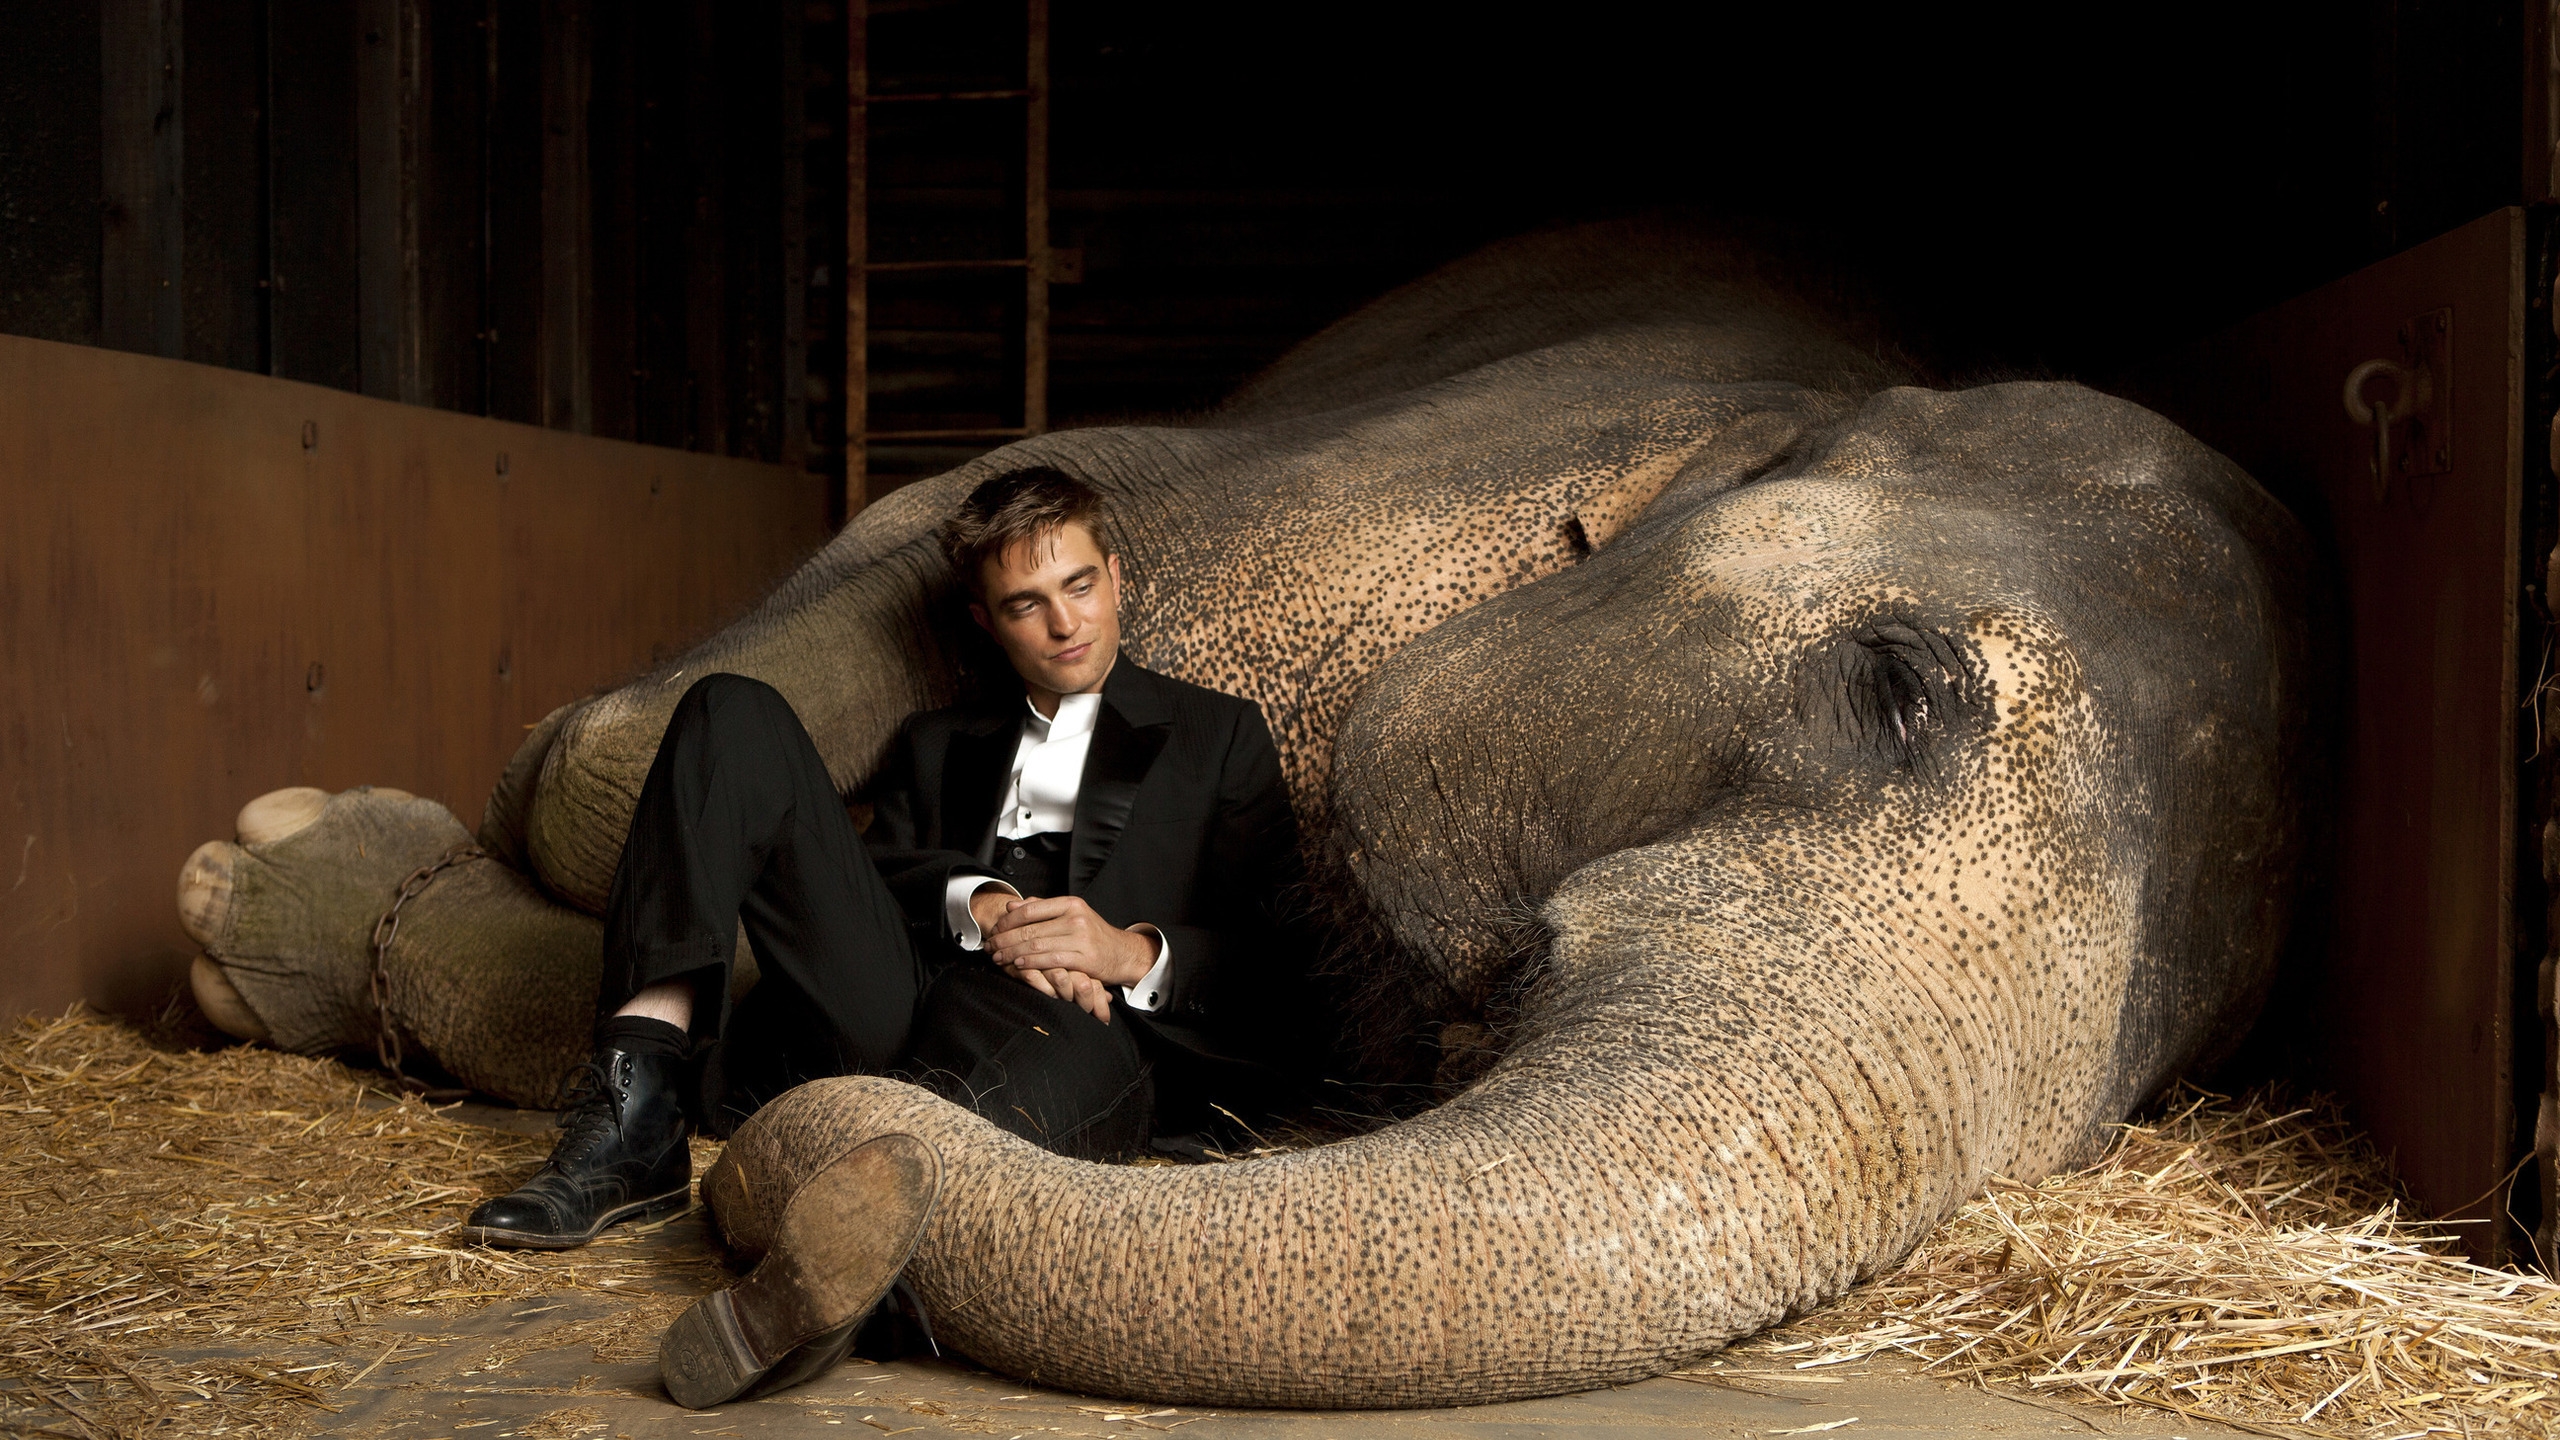 Robert Pattinson Close to Elephant for 2560x1440 HDTV resolution